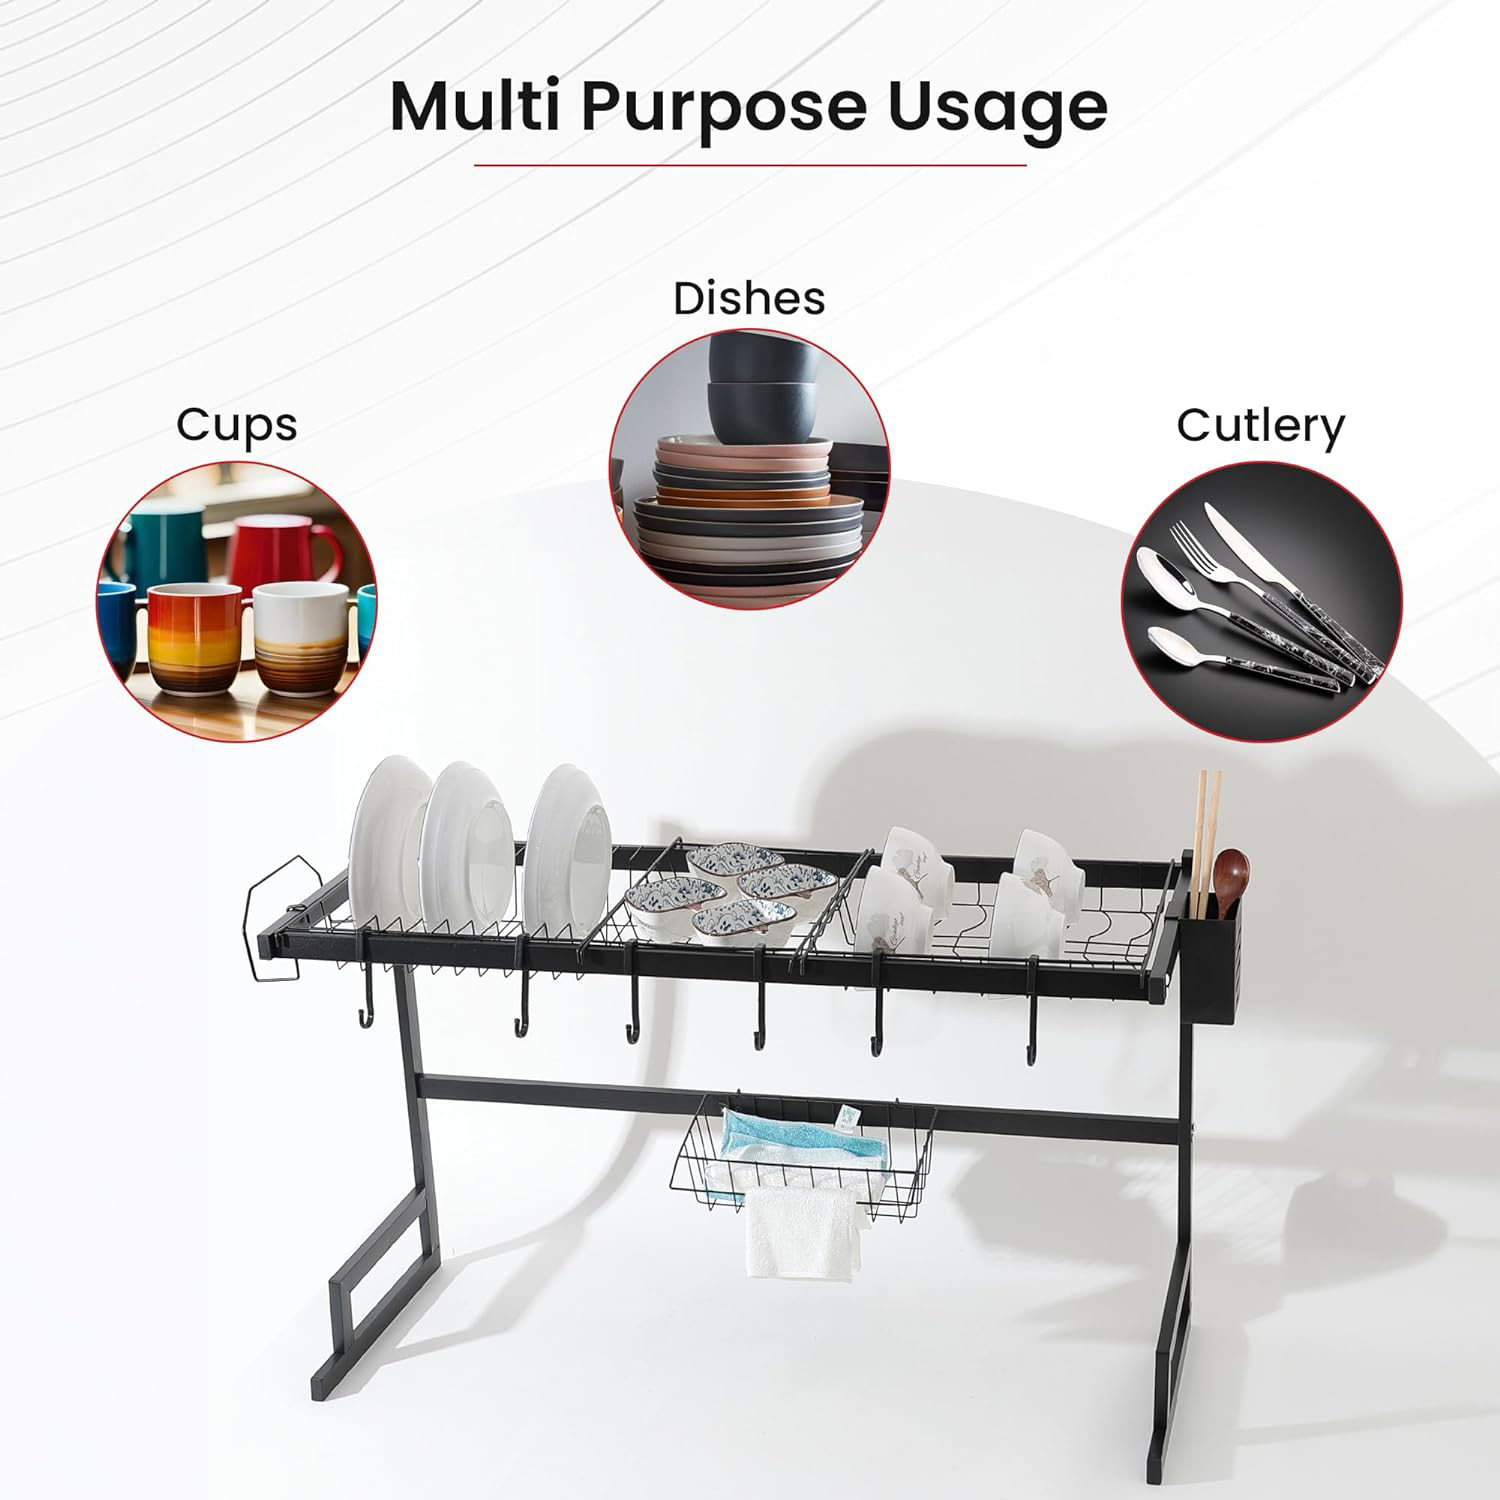 Kuber Industries Dish Drying Rack|Storage Rack for Kitchen Counter|Drainboard & Cutting Board Holder|Premium Utensils Basket (Black)